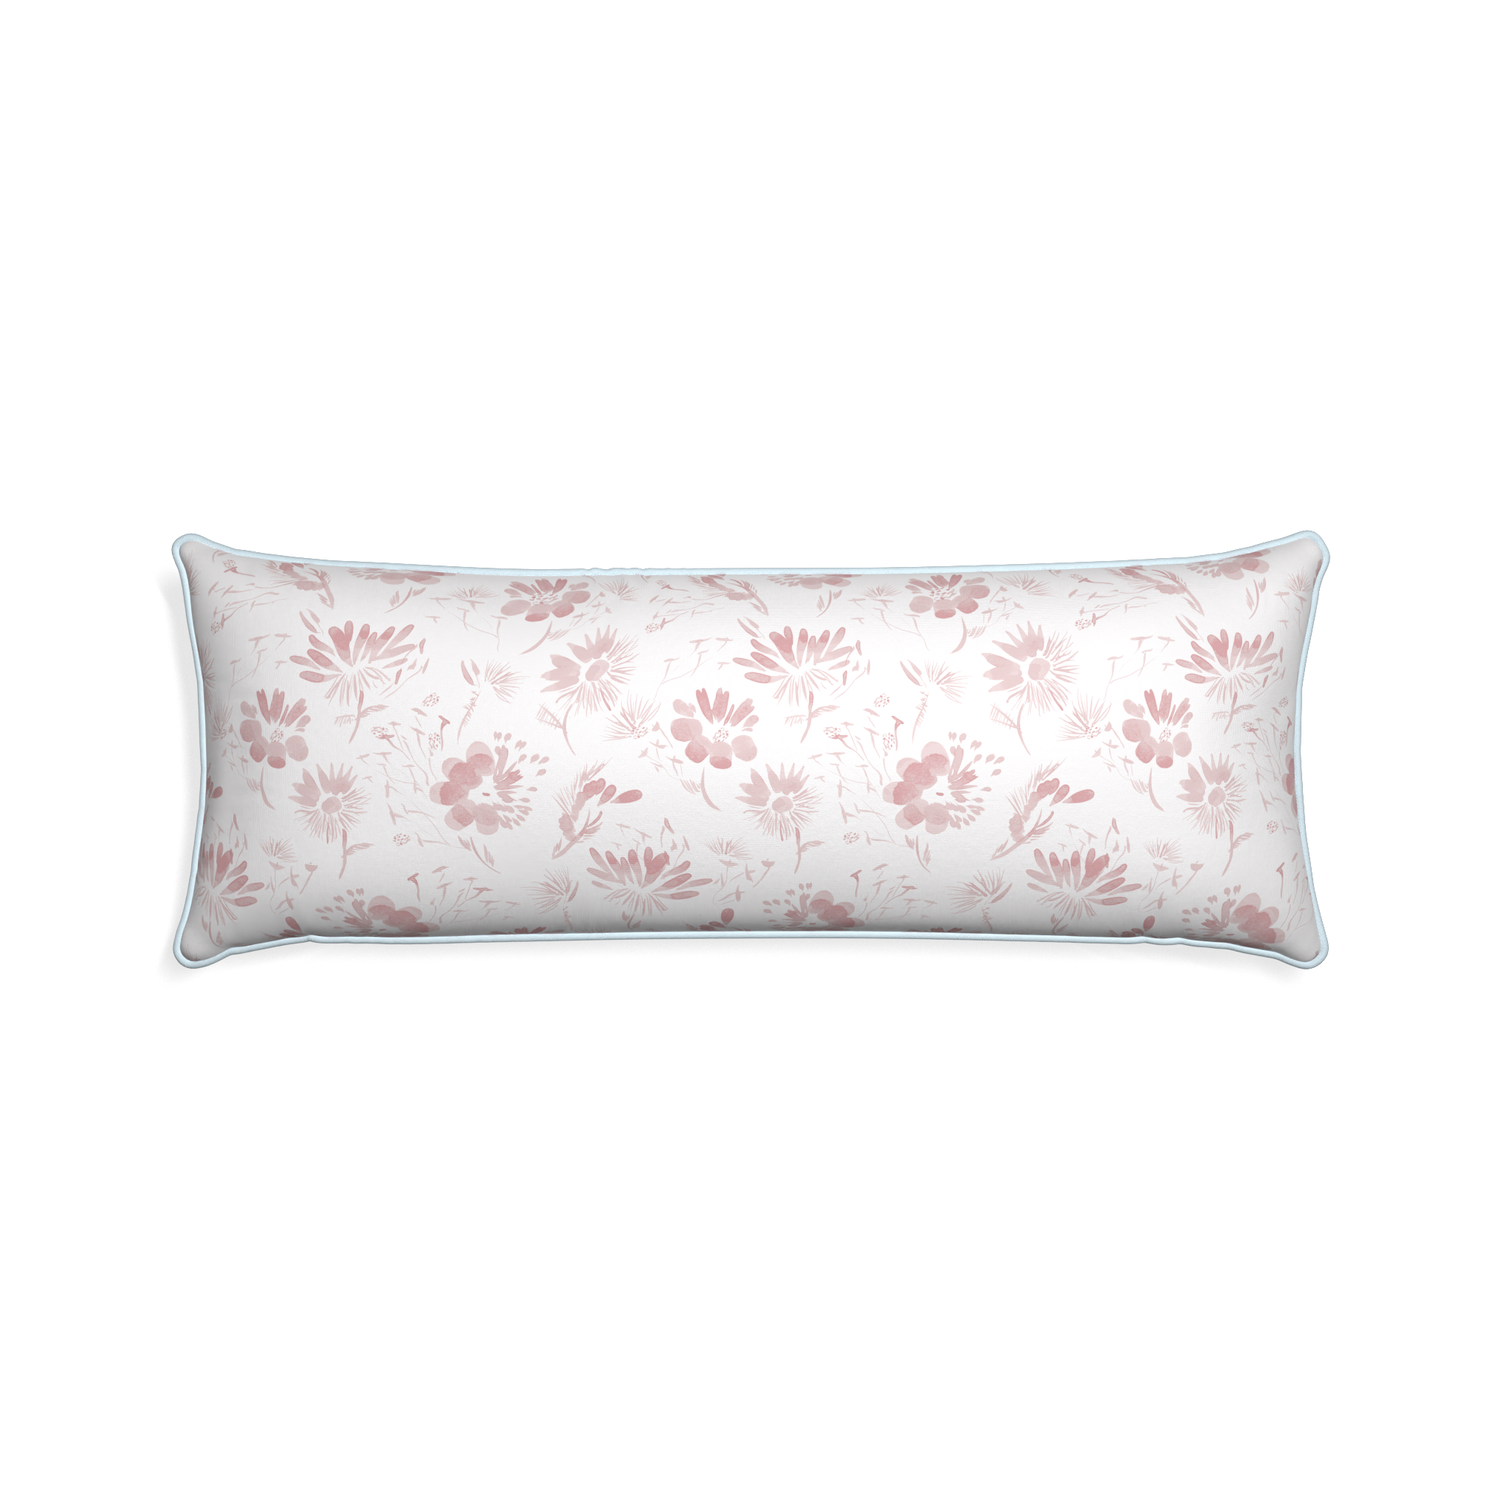 Xl-lumbar blake custom pillow with powder piping on white background